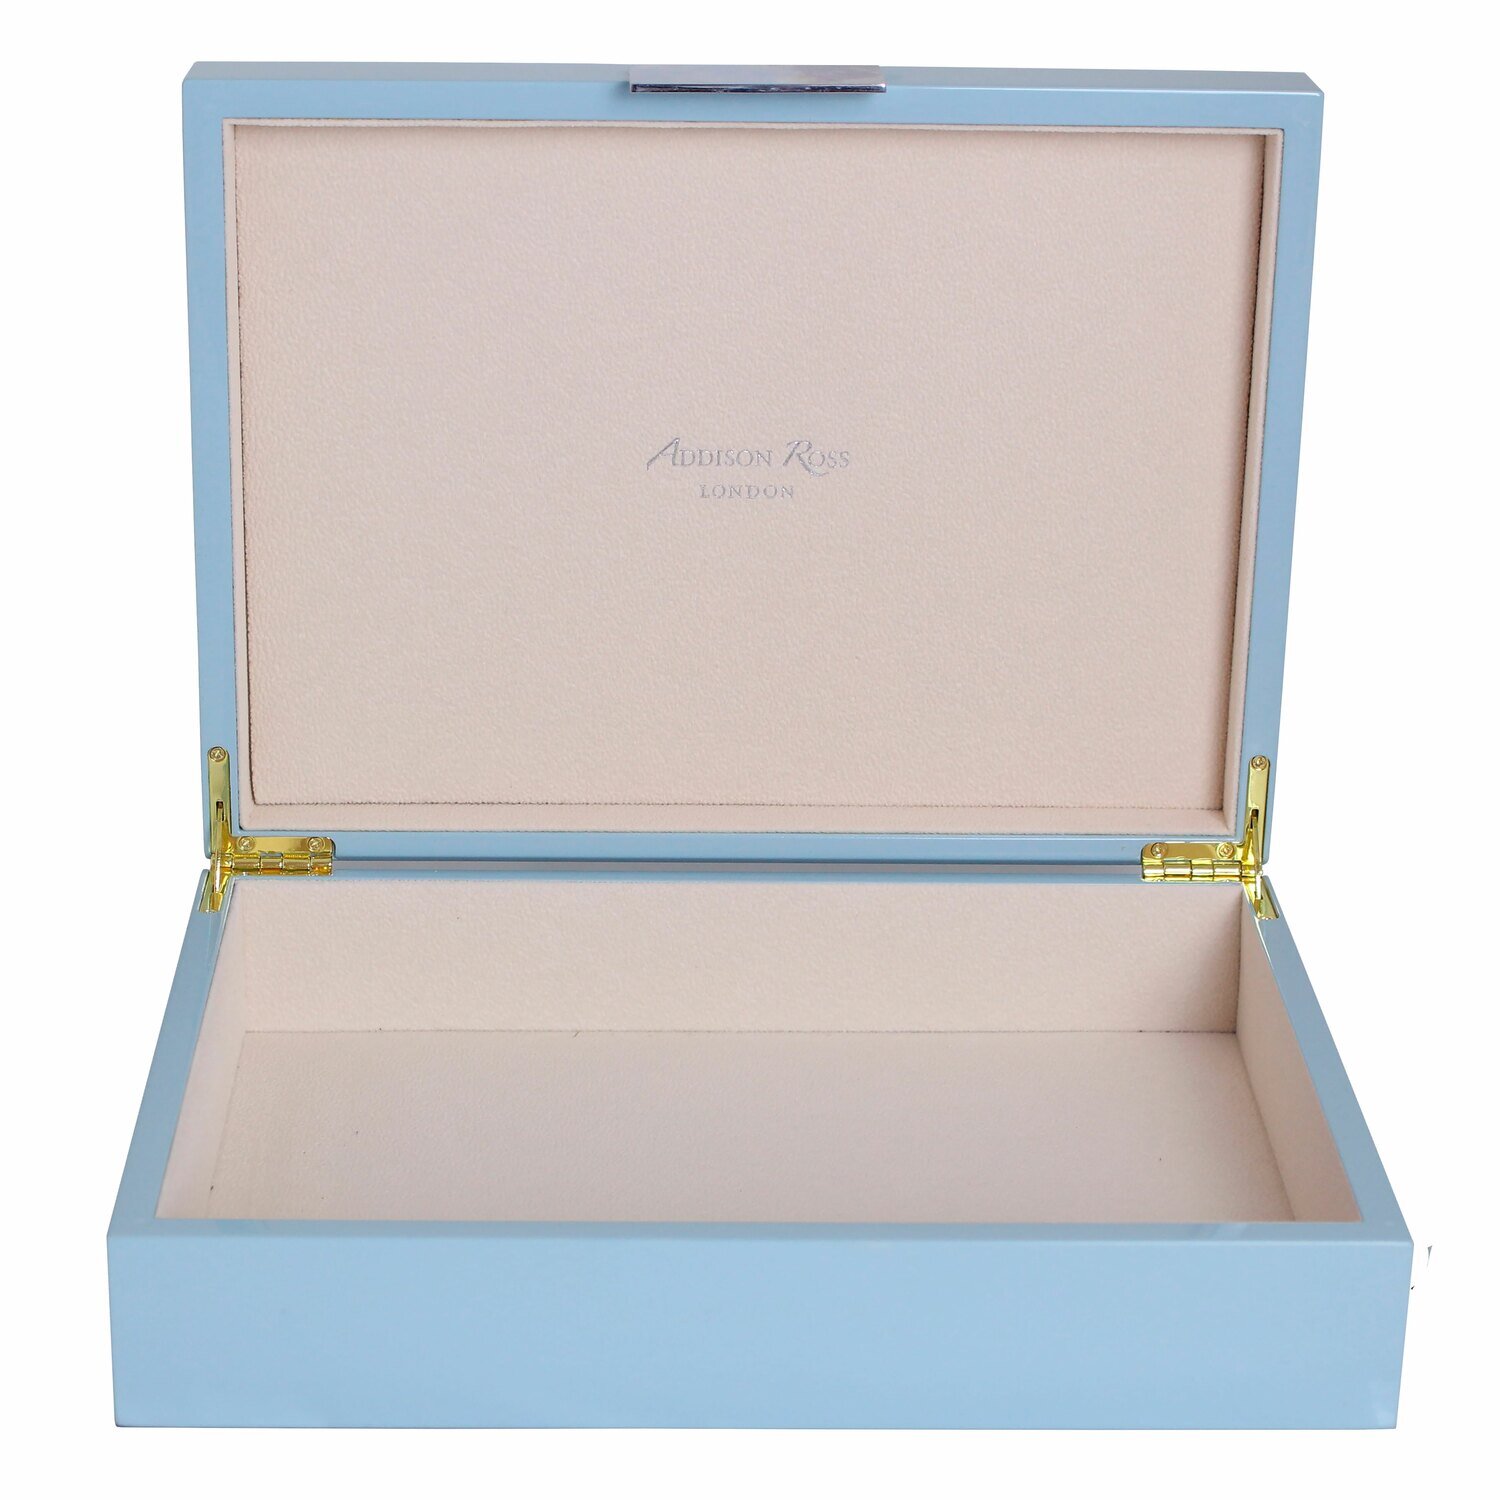 Addison Ross Pale Denim Blue Storage Box8 x 11 Inch Lacquer BX1506